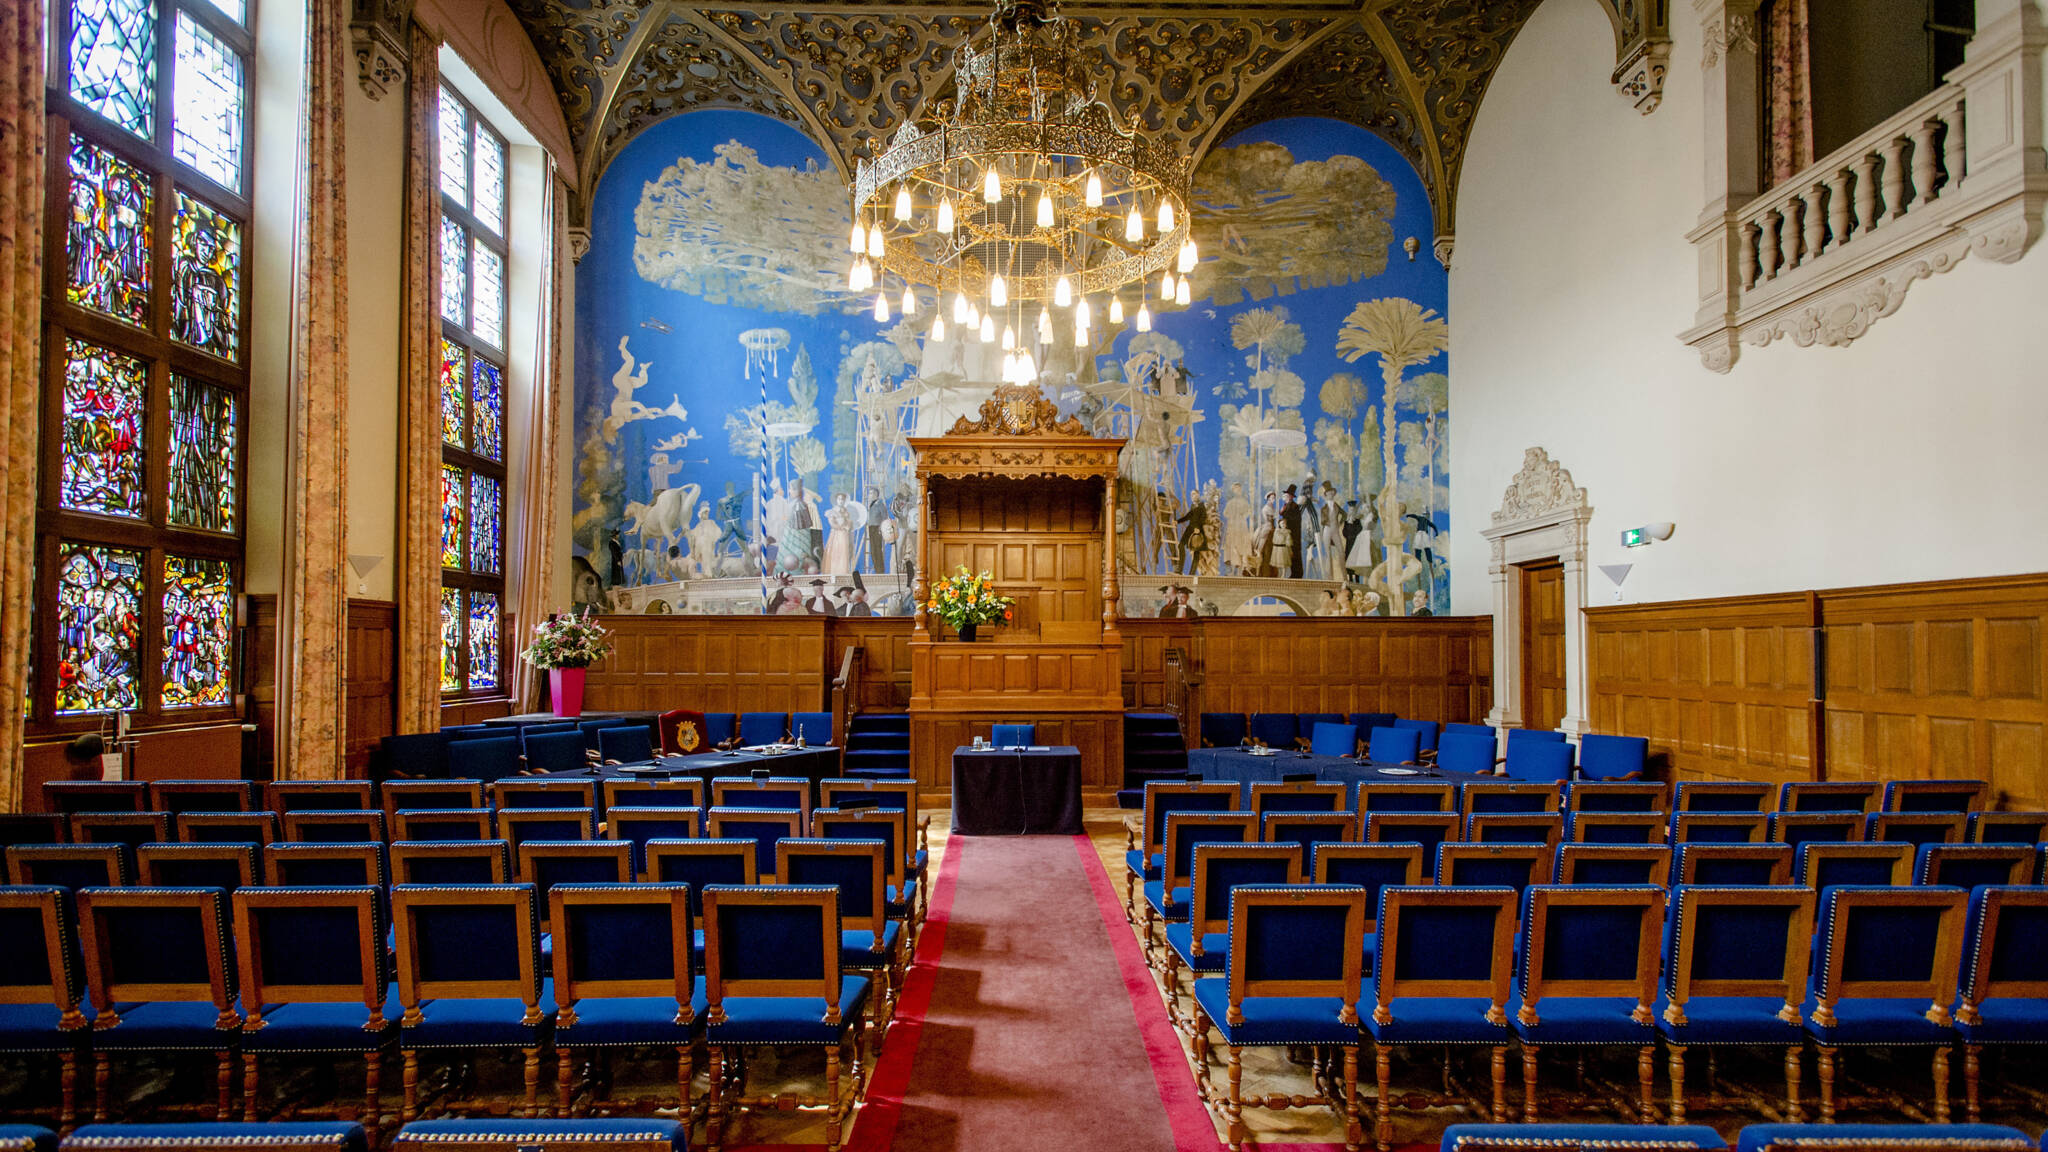 University of Groningen - Faculty of Law